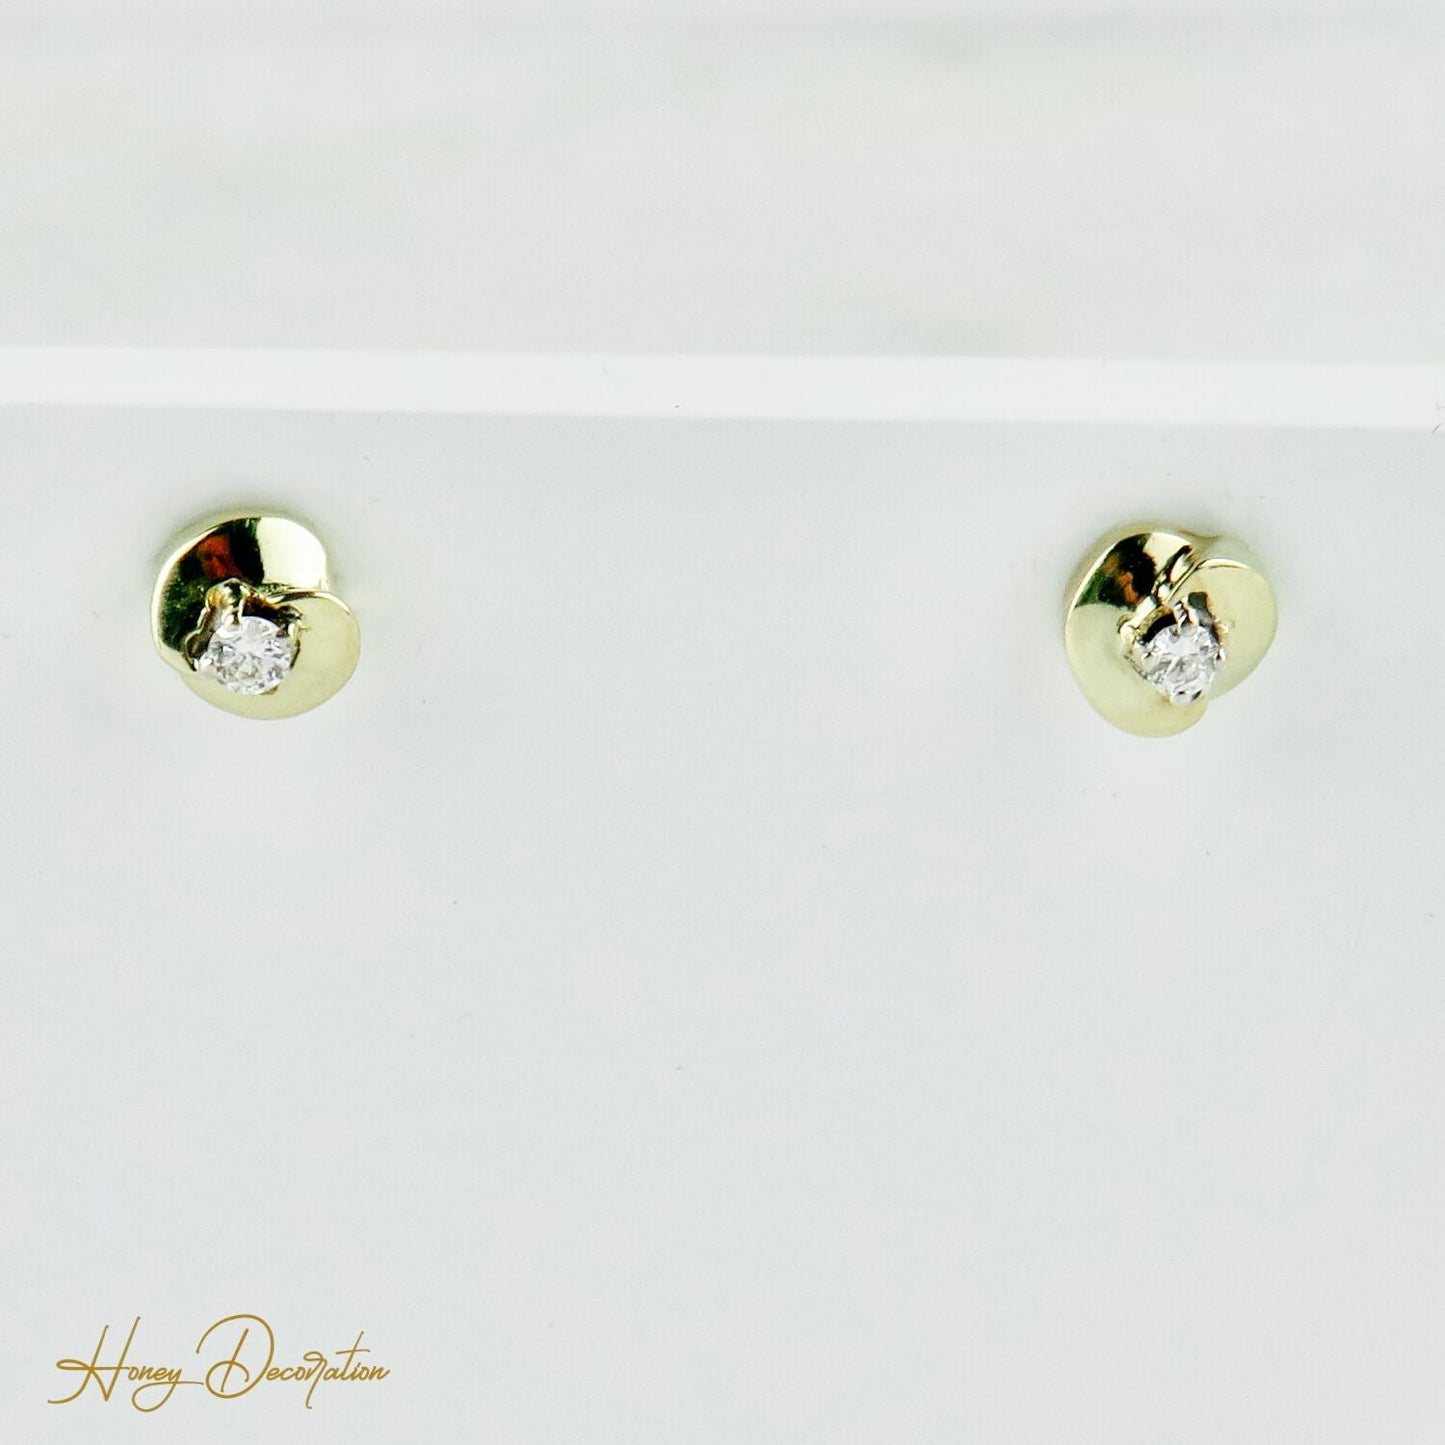 Süße Gold-Ohrringe mit Diamant-Solitären - Honey Decoration